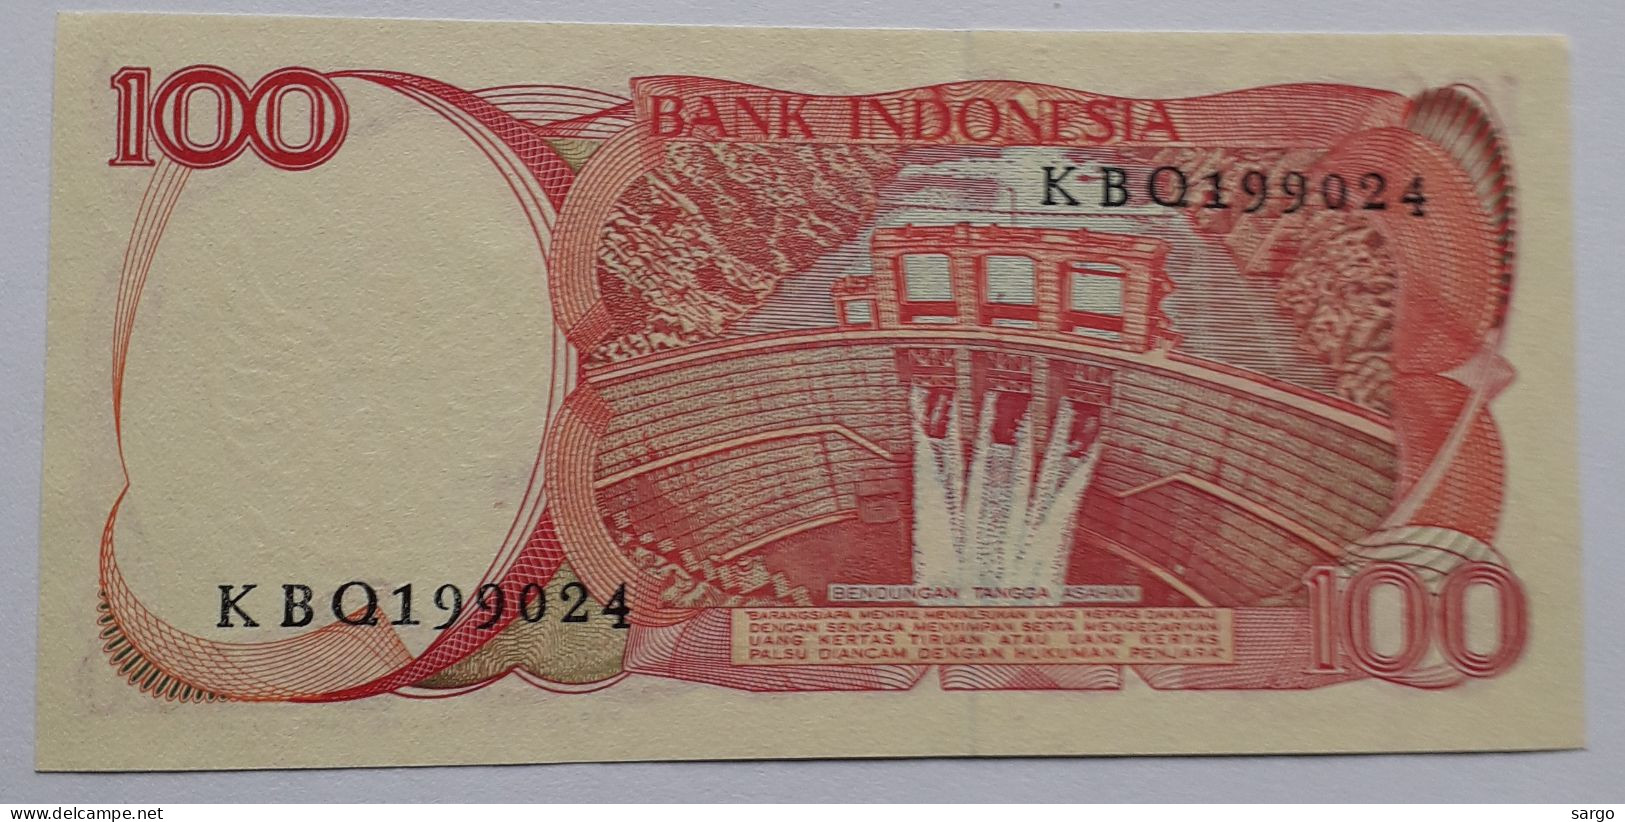 INDONEASIA - 100 RUPIAH - P 122 (1984) - UNCIRC - BANKNOTES - PAPER MONEY - CARTAMONETA - - Indonesien